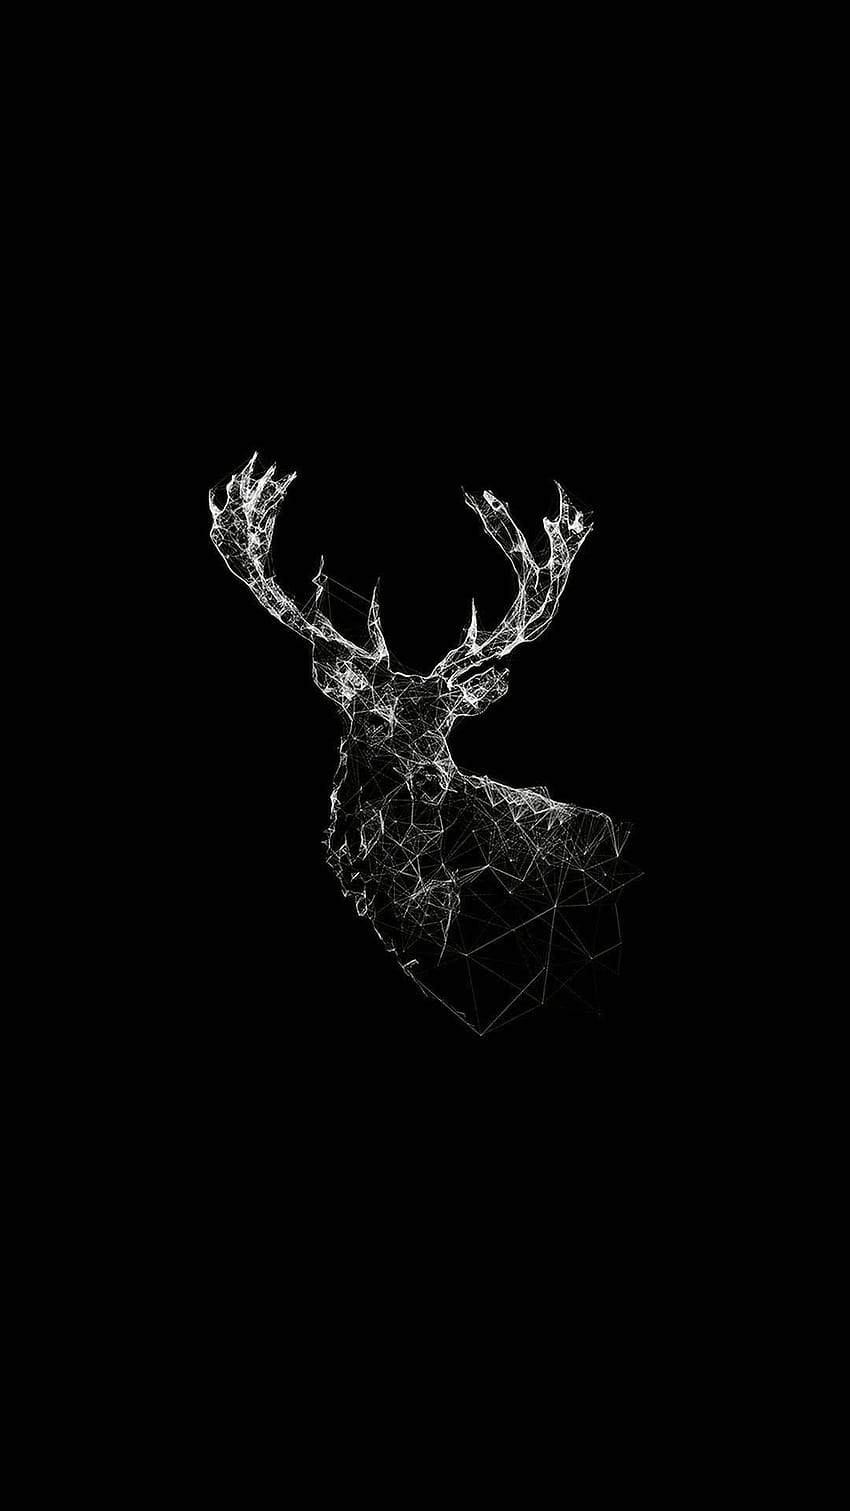 john deere logo wallpaper for iphone